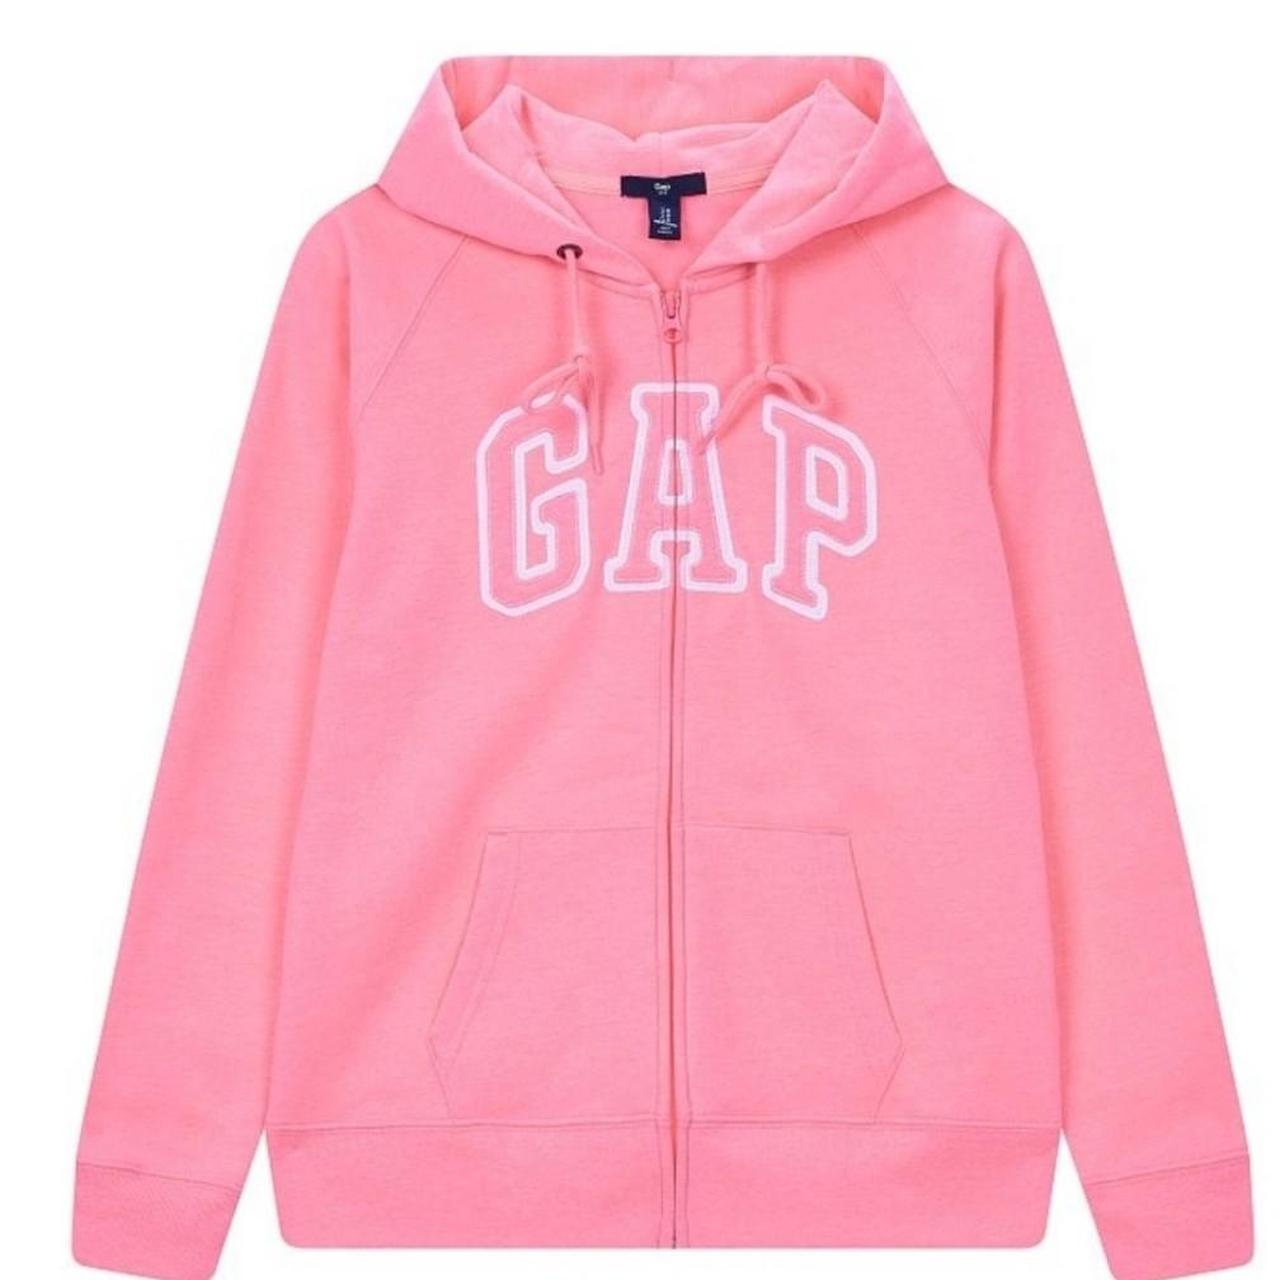 GAP Girl's Pink Zip-Up Jacket (FINAL PRICE) -size...